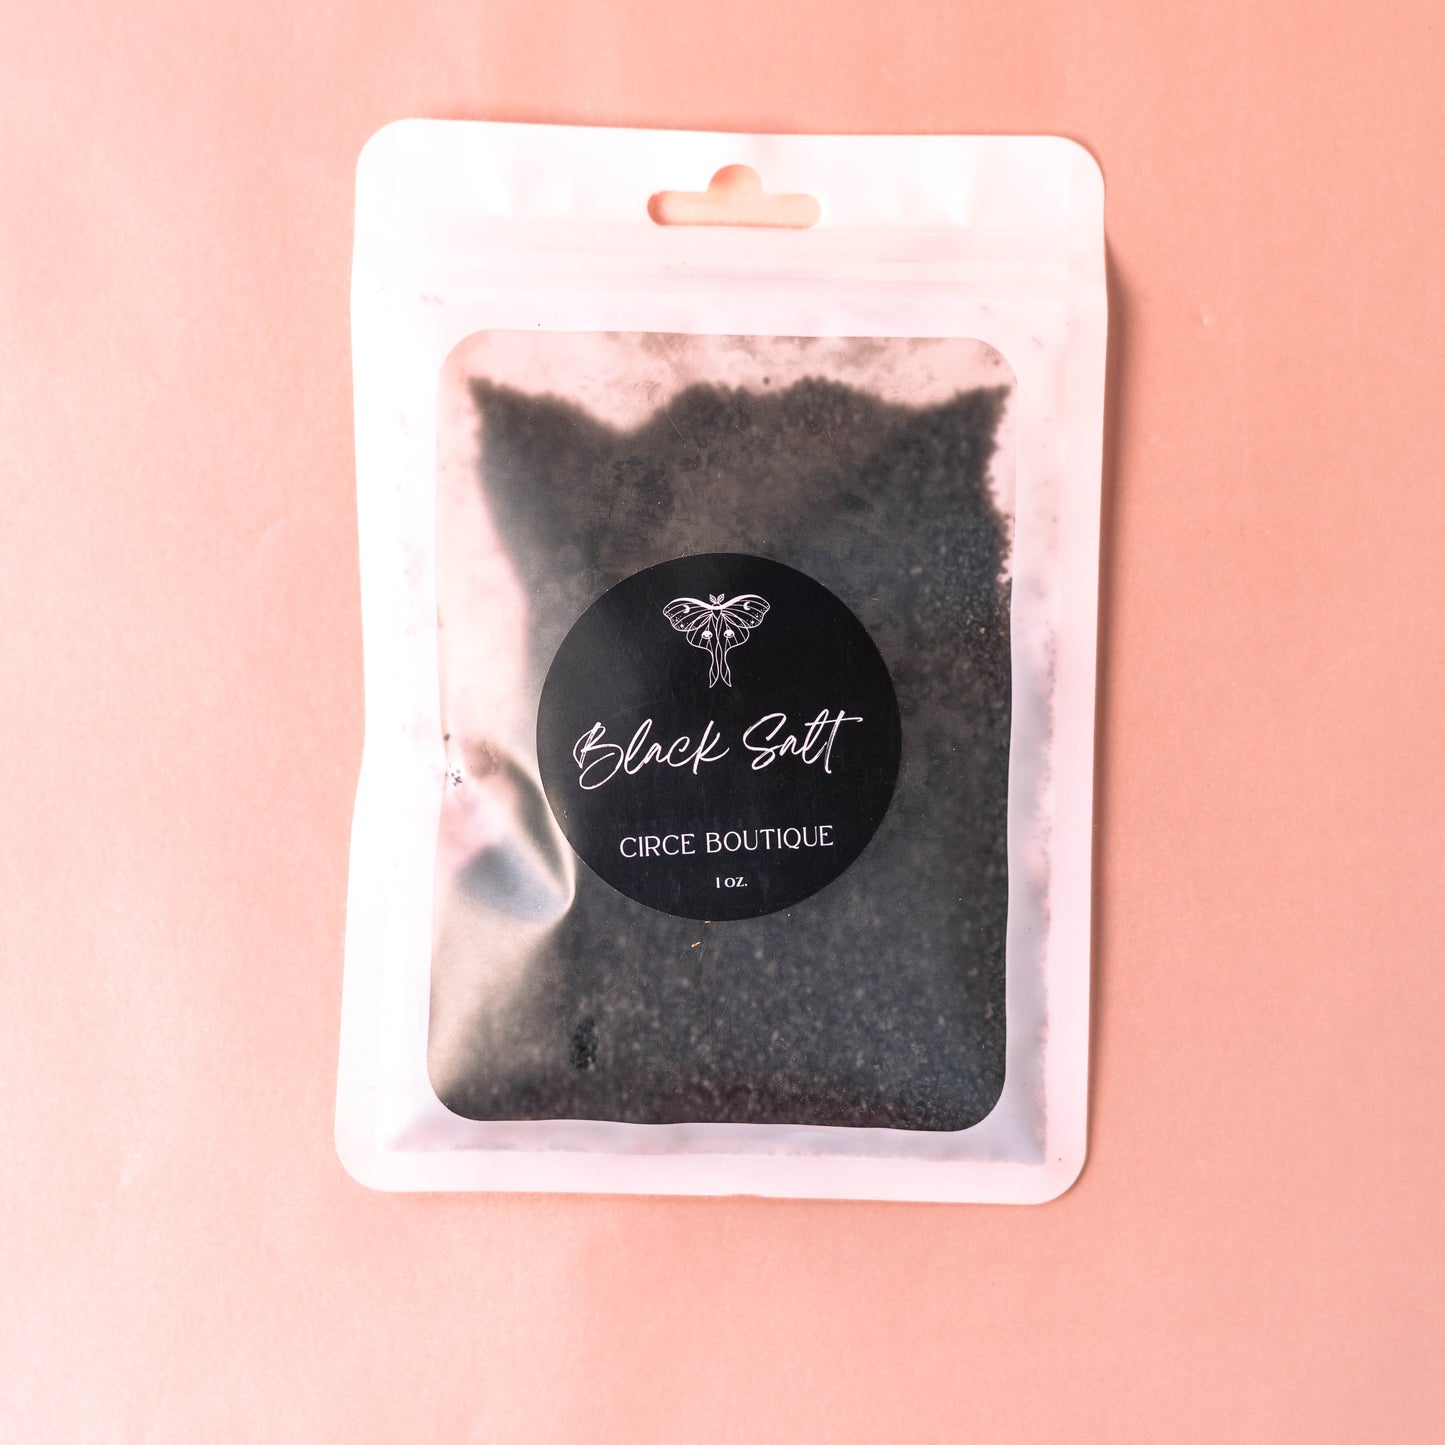 CIRCE Black Salt 1 oz. - Spell Powder  from CirceBoutique